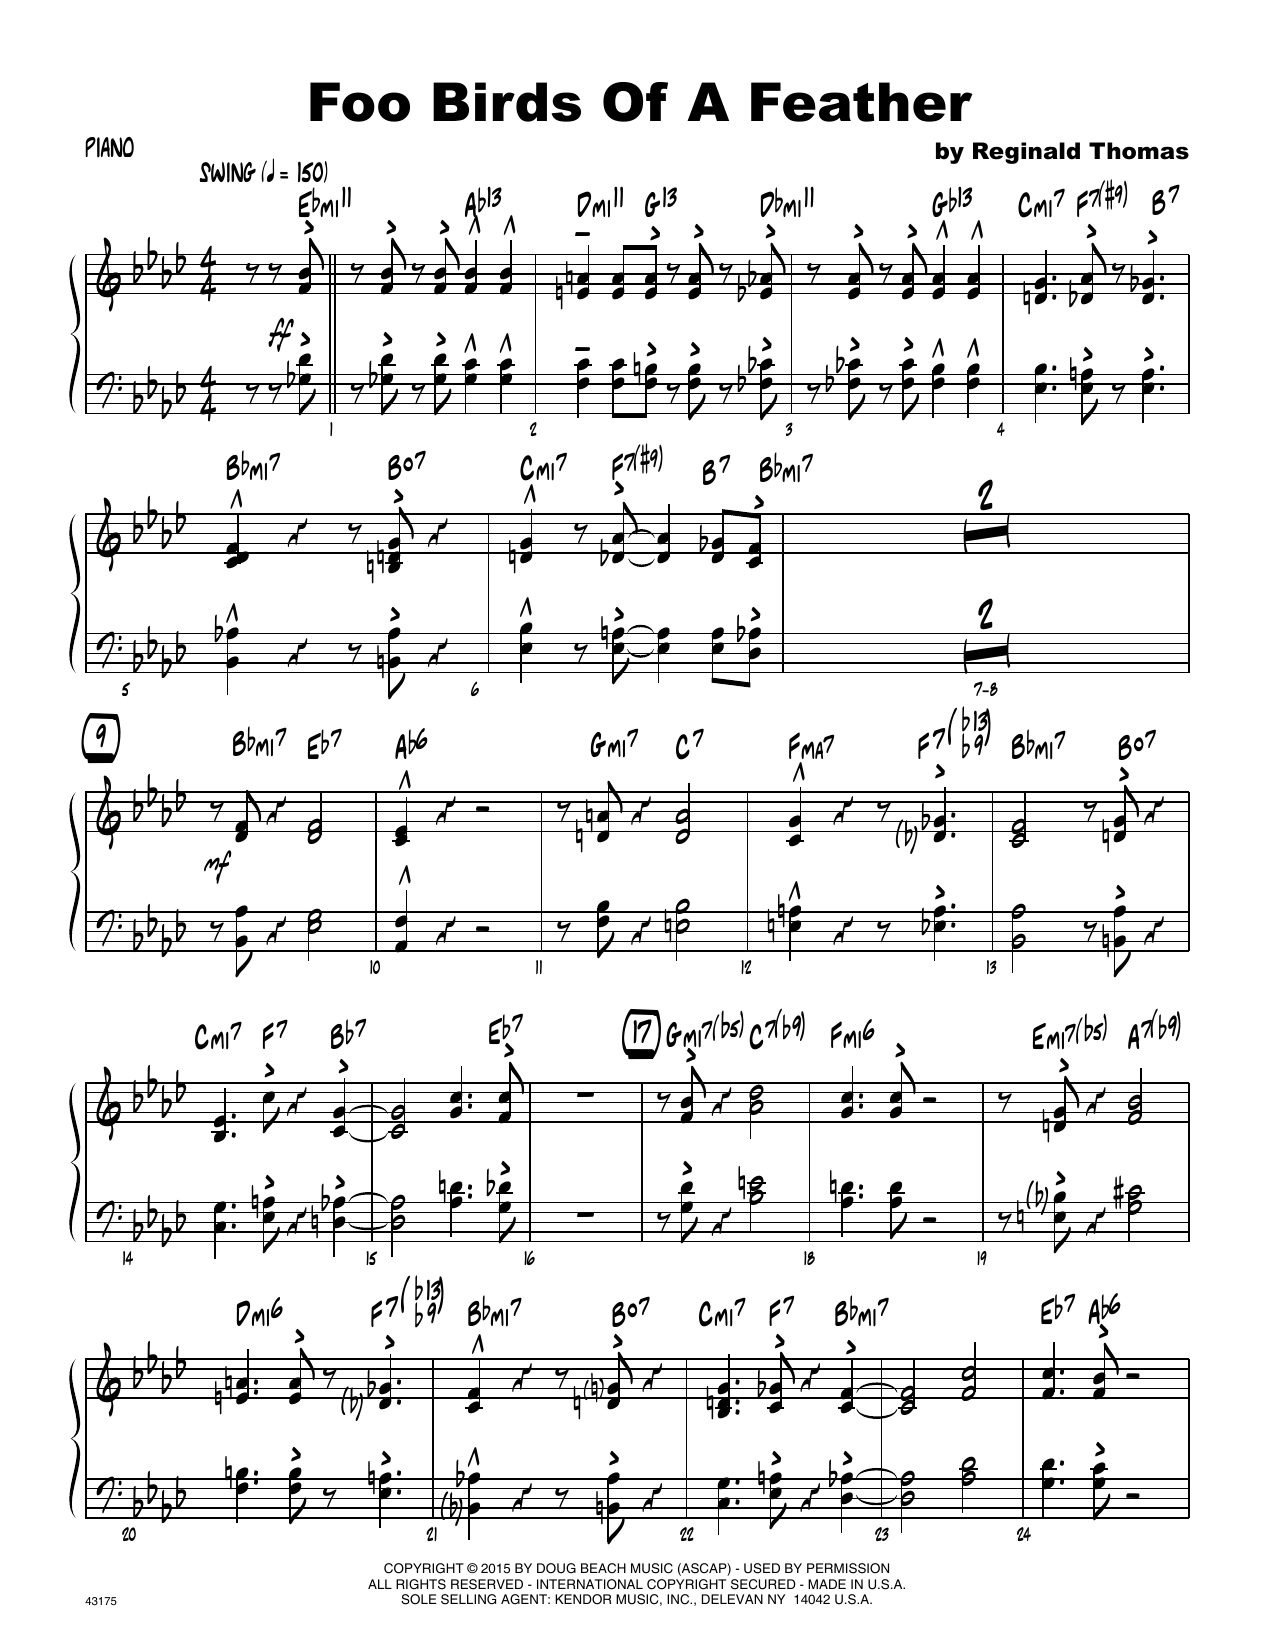 Download Reginald Thomas Foo Birds Of A Feather - Piano Sheet Music